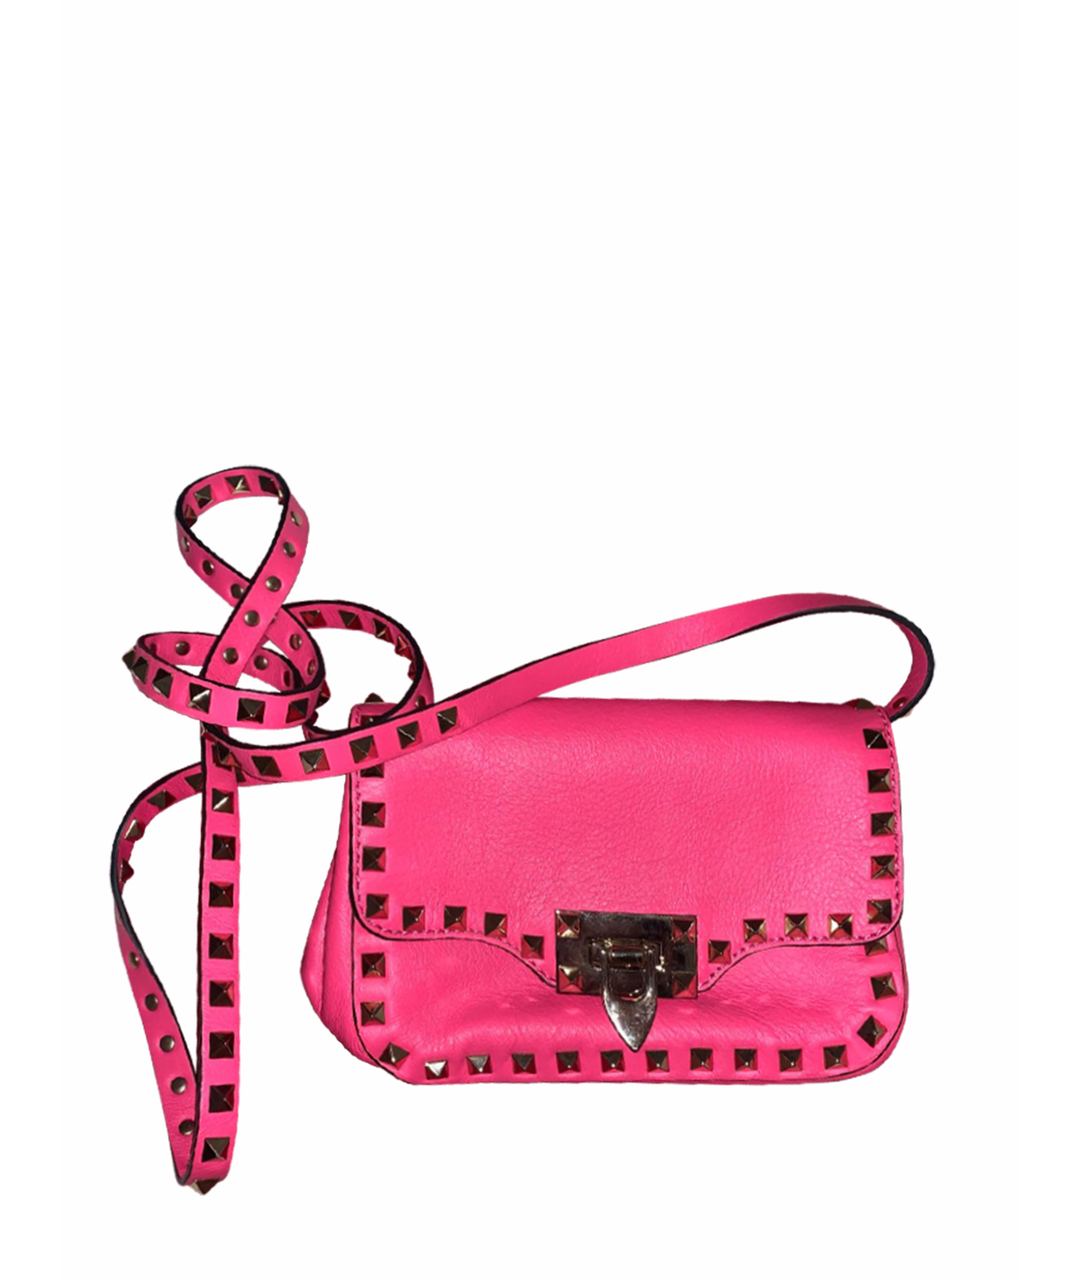 VALENTINO Розовая кожаная сумка тоут, фото 1